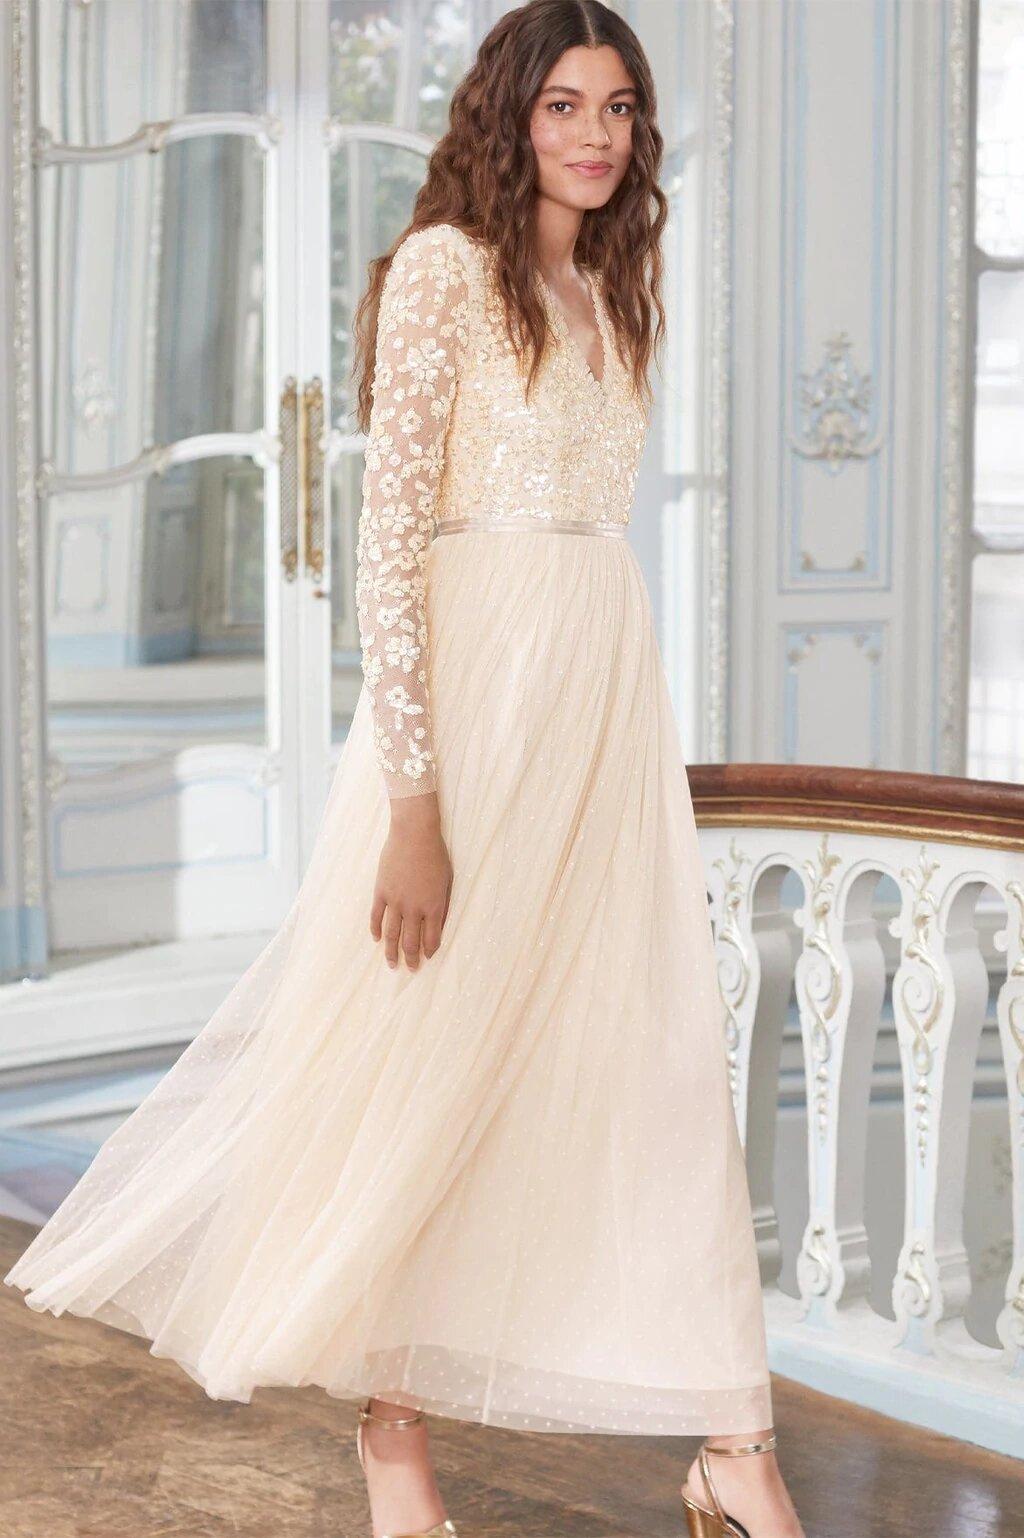 Model wearing a long sleeved sequin wedding dress